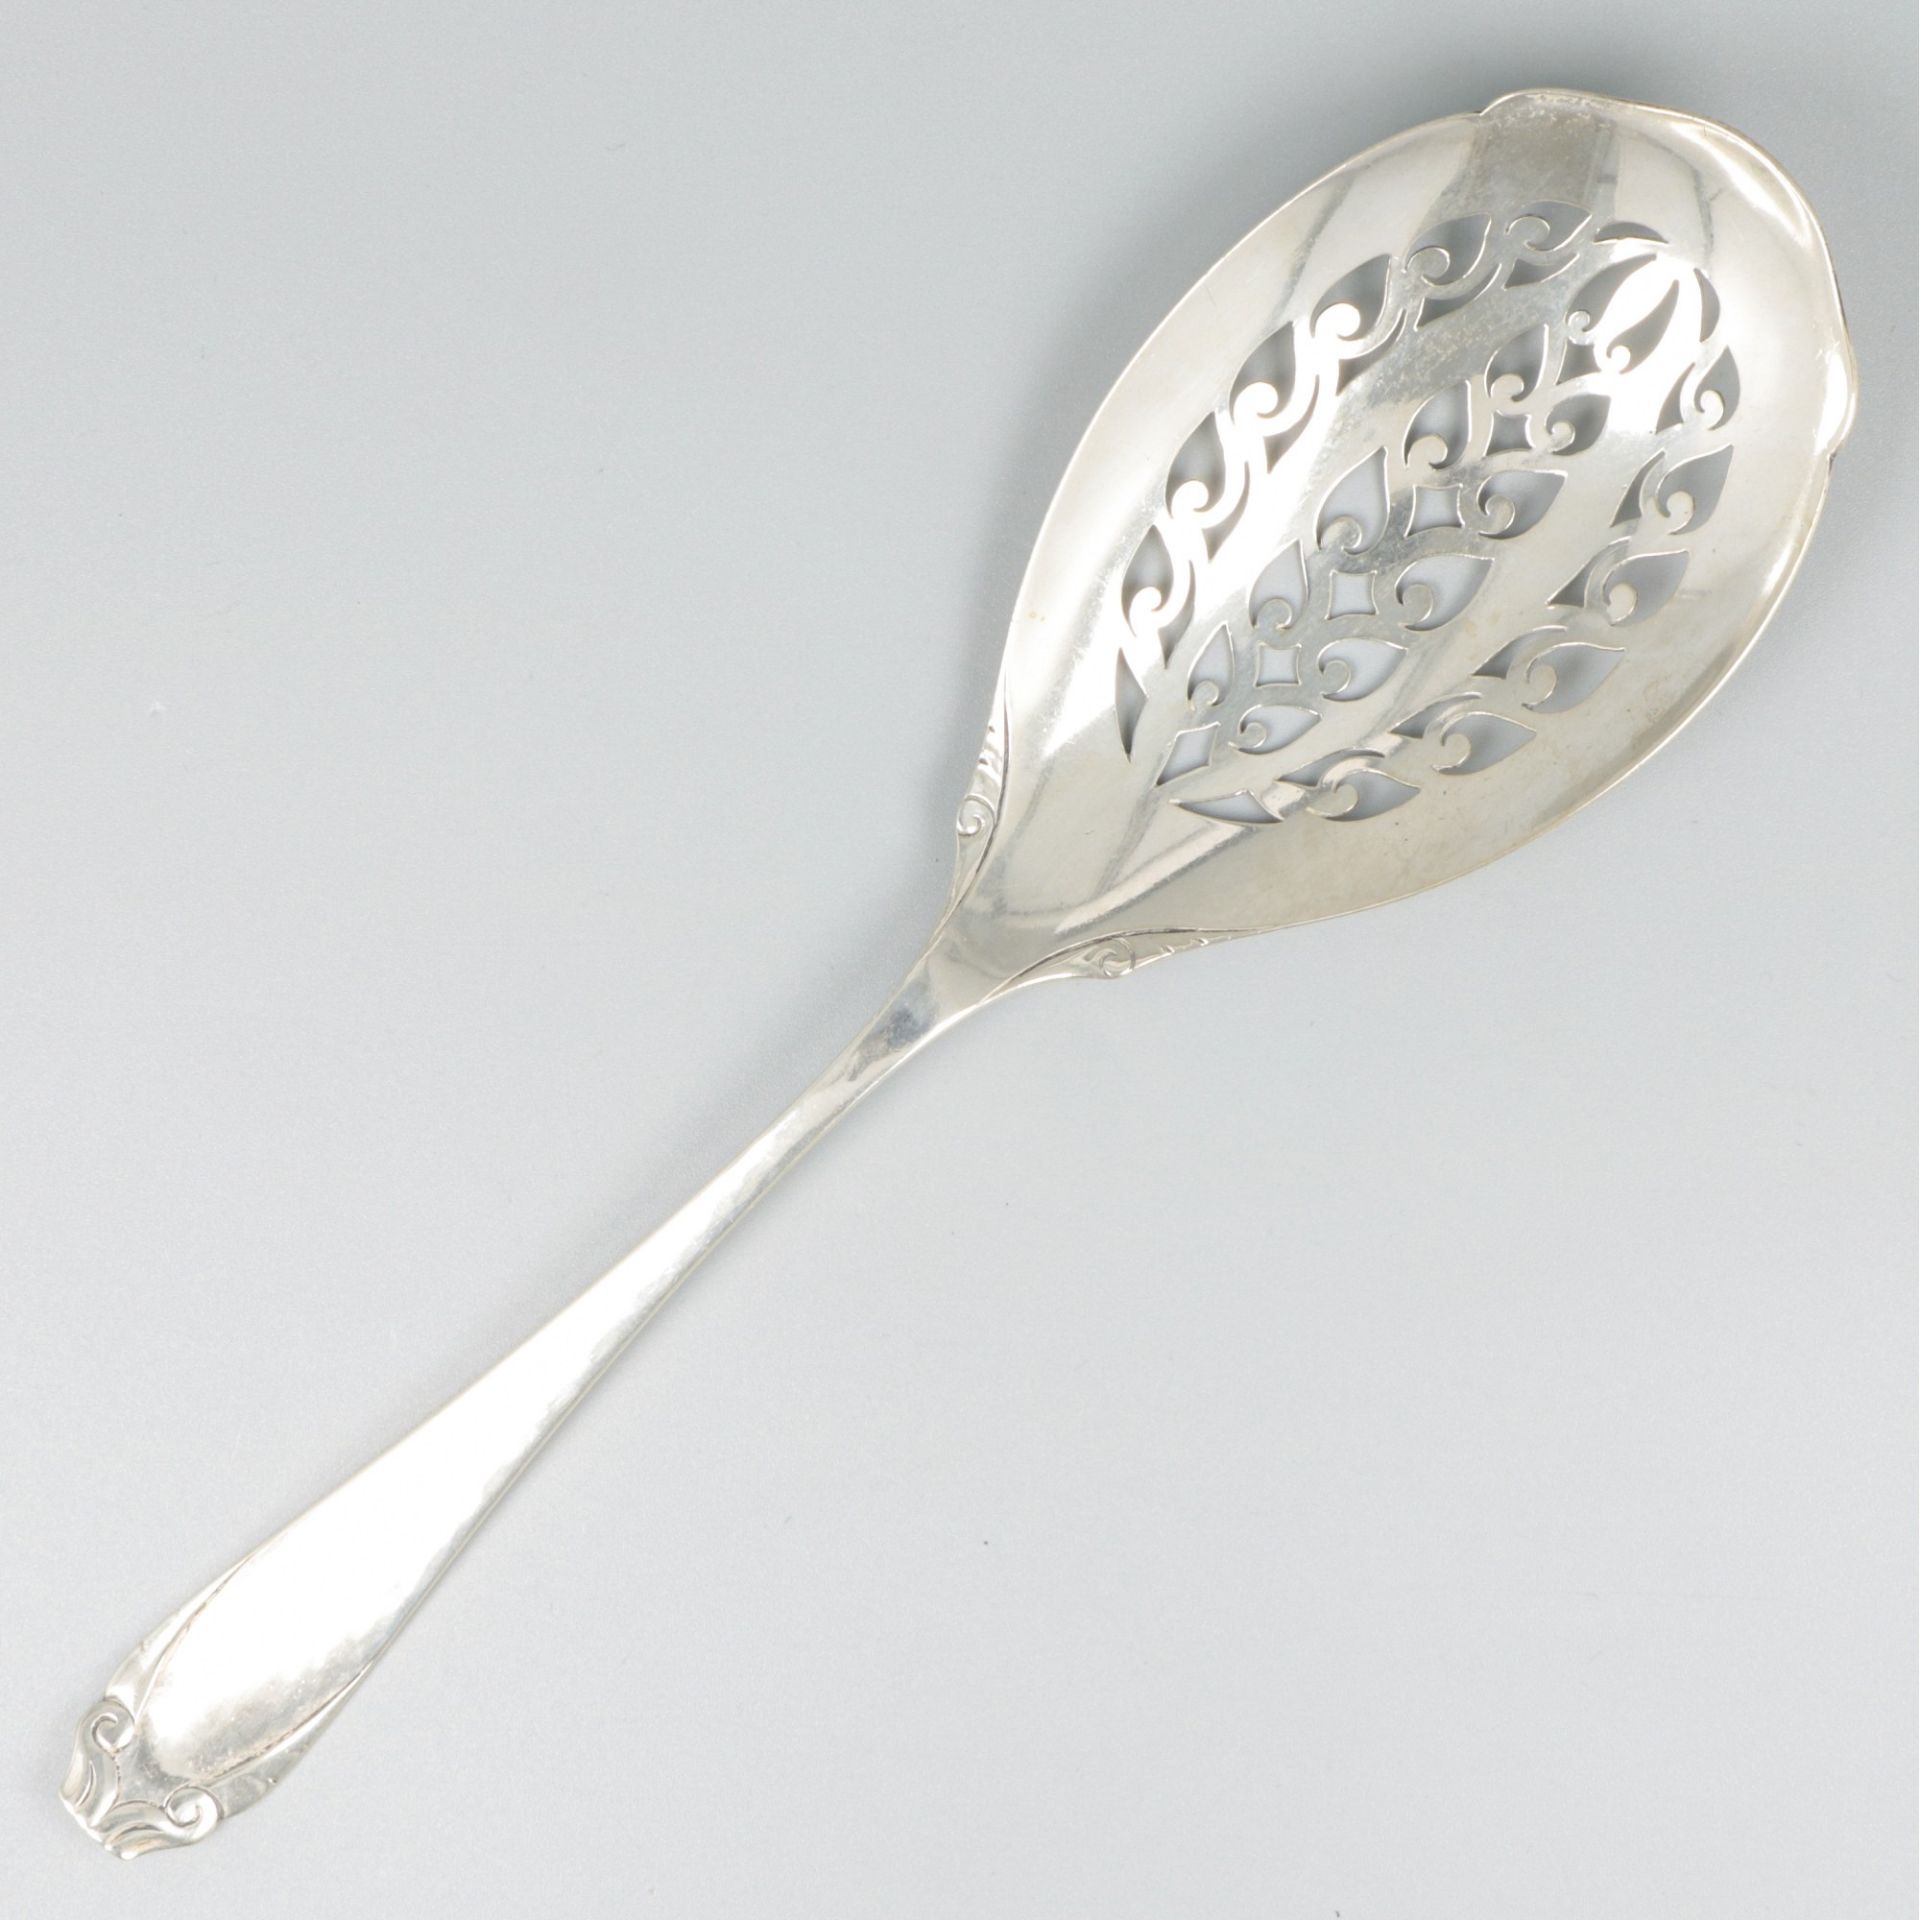 Wet fruit scoop, model "Moustache", silver.